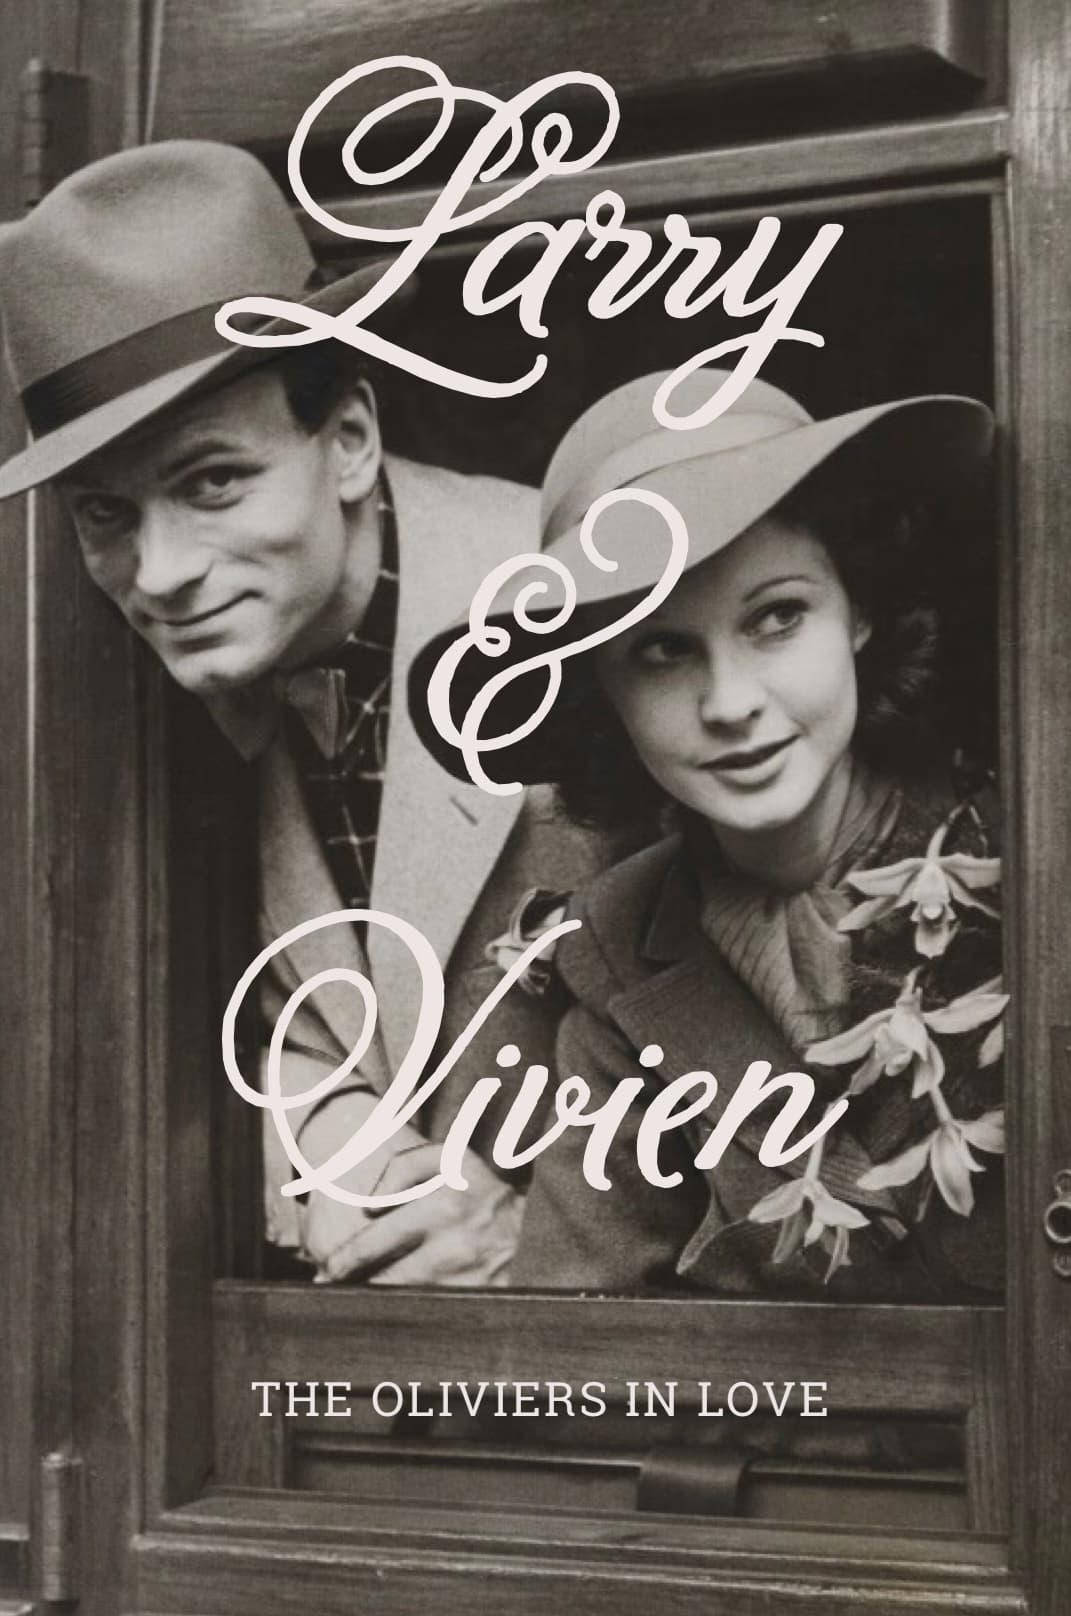 Larry & Vivien: The Oliviers in Love